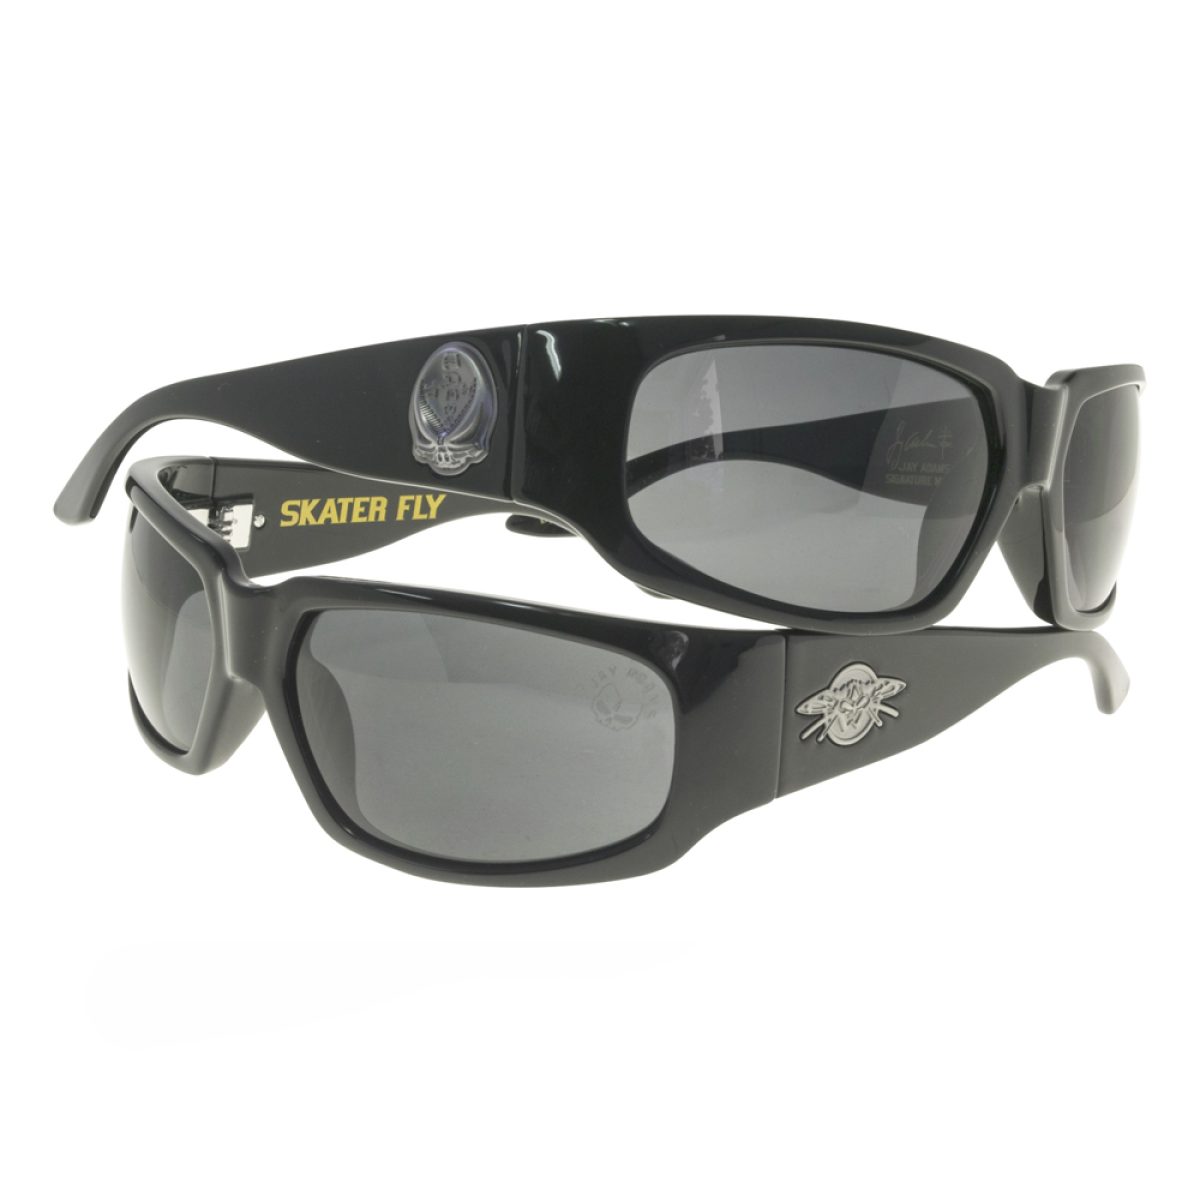 Sunglasses Skater Fly / Jay Adams Signature | Sunglasses Black